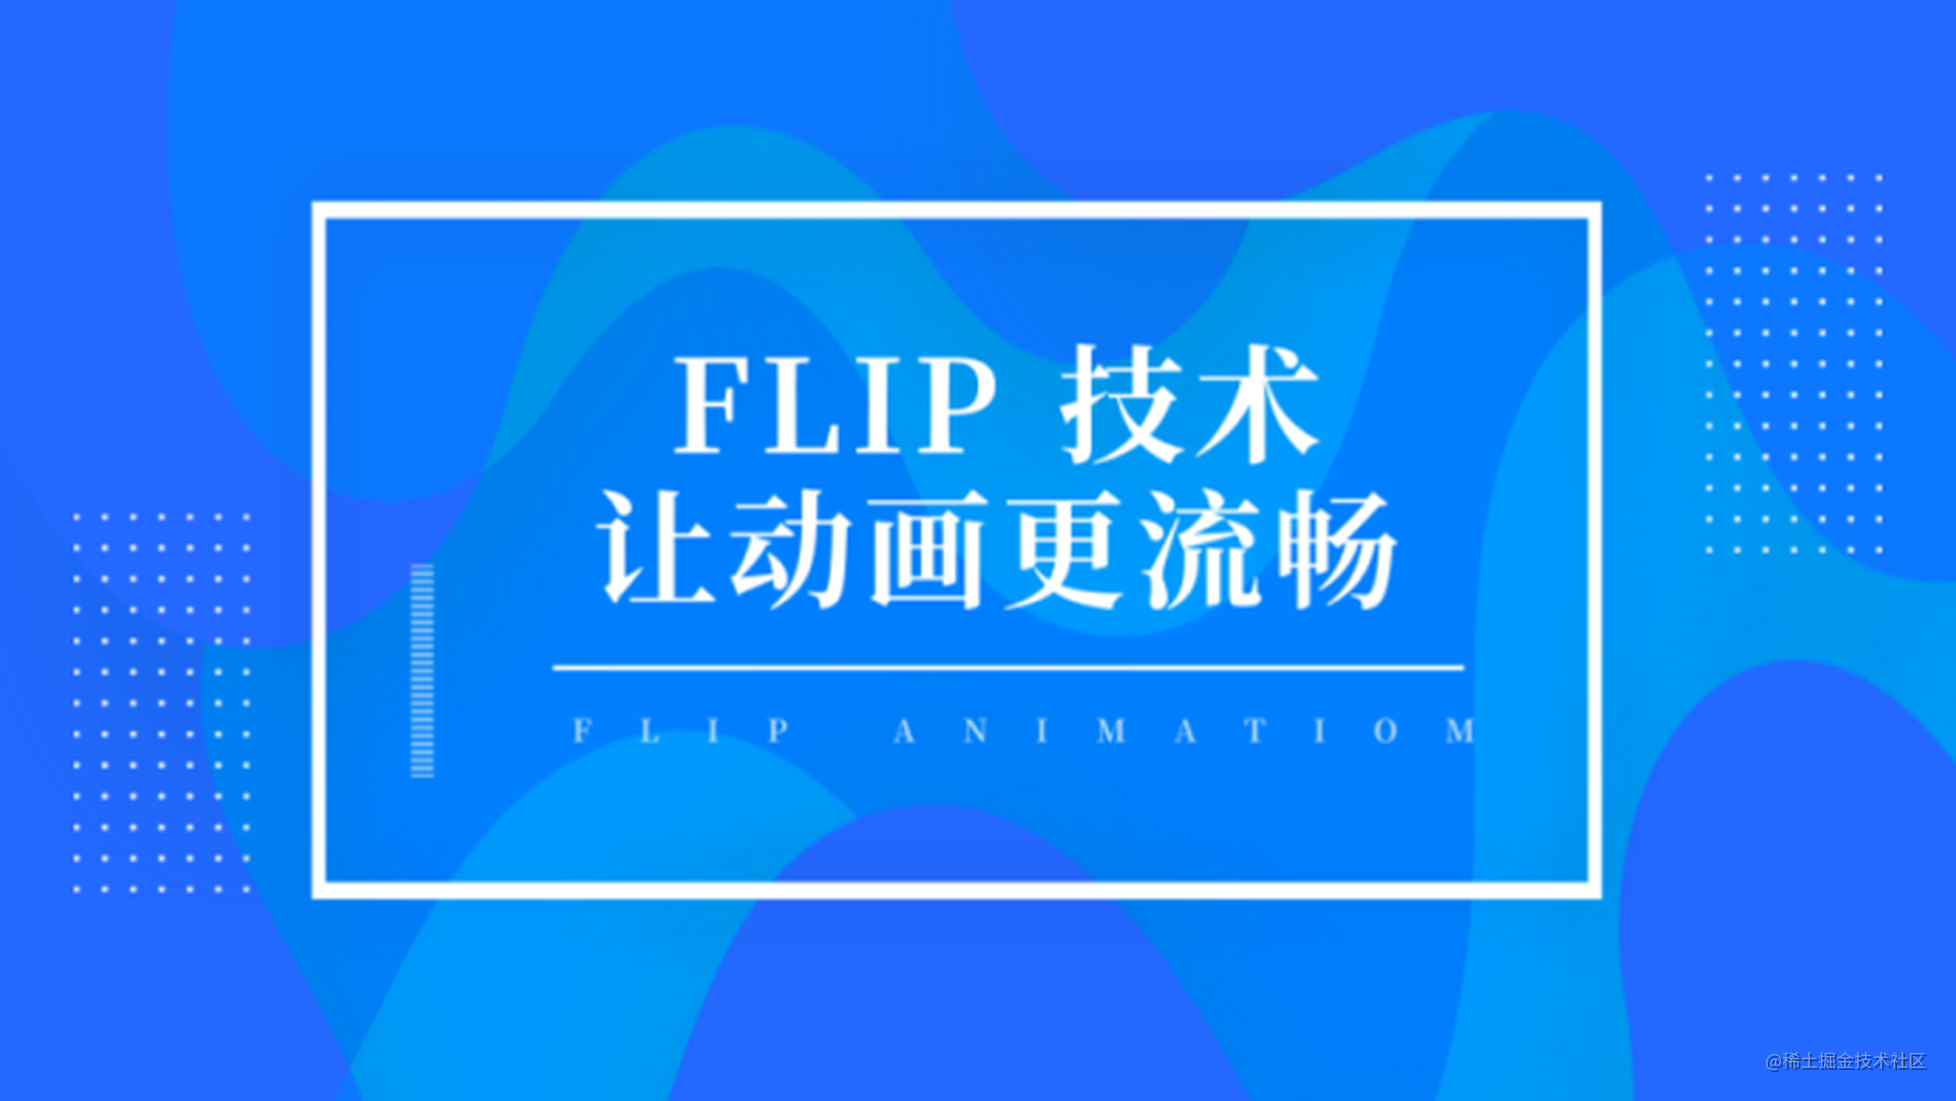 FLIP技术让动画更流畅